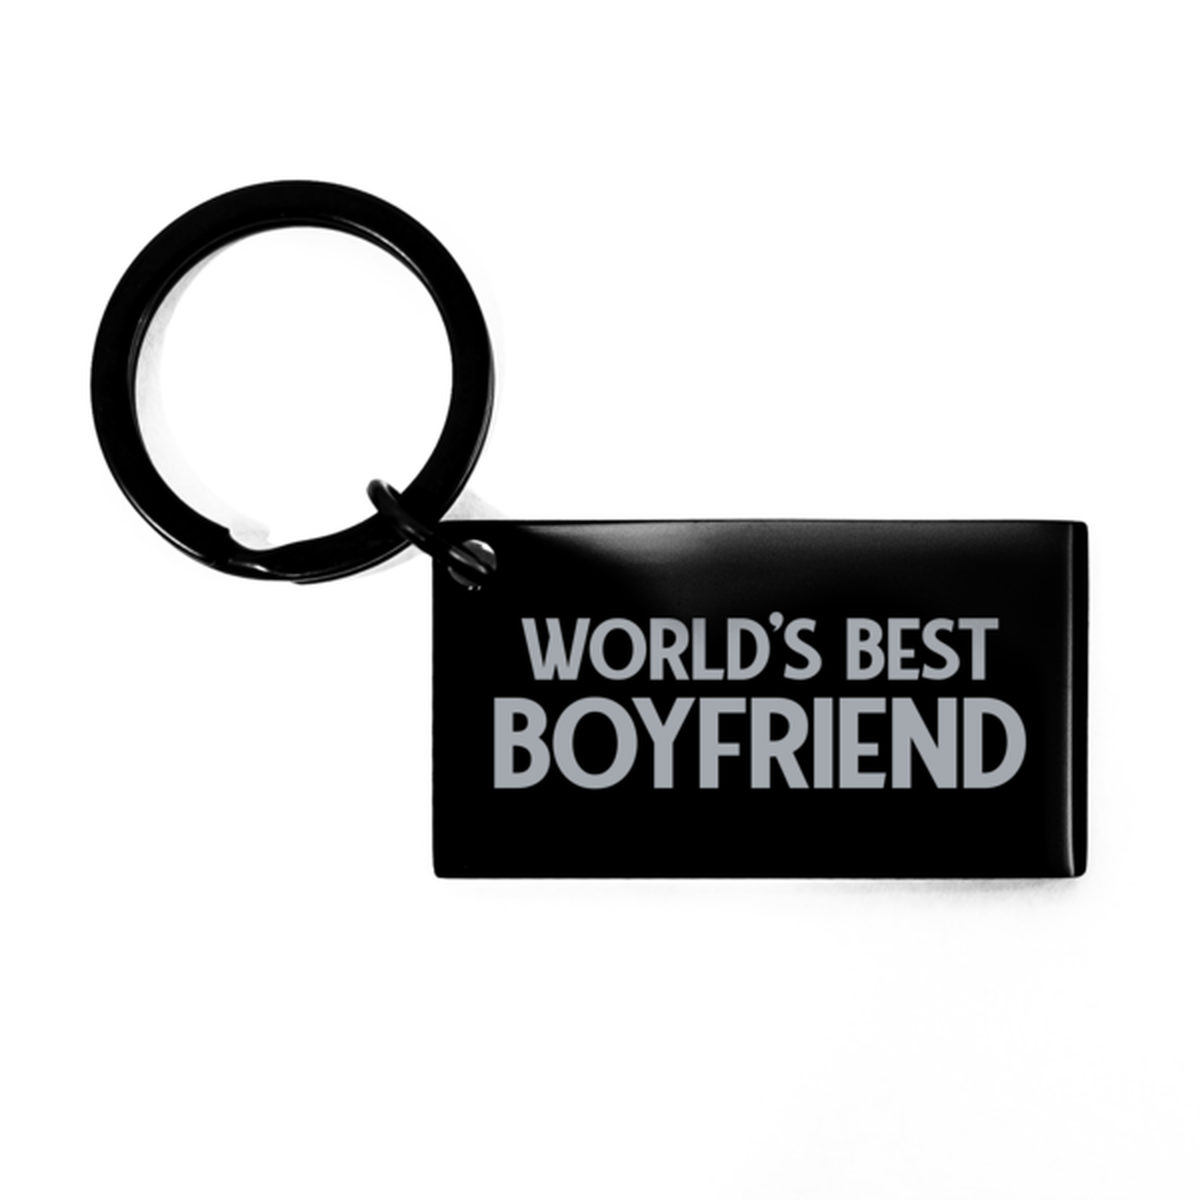 Worlds Best Boyfriend Gifts, Funny Black Engraved Keychain For Boyfriend, Birthday Presents For Men